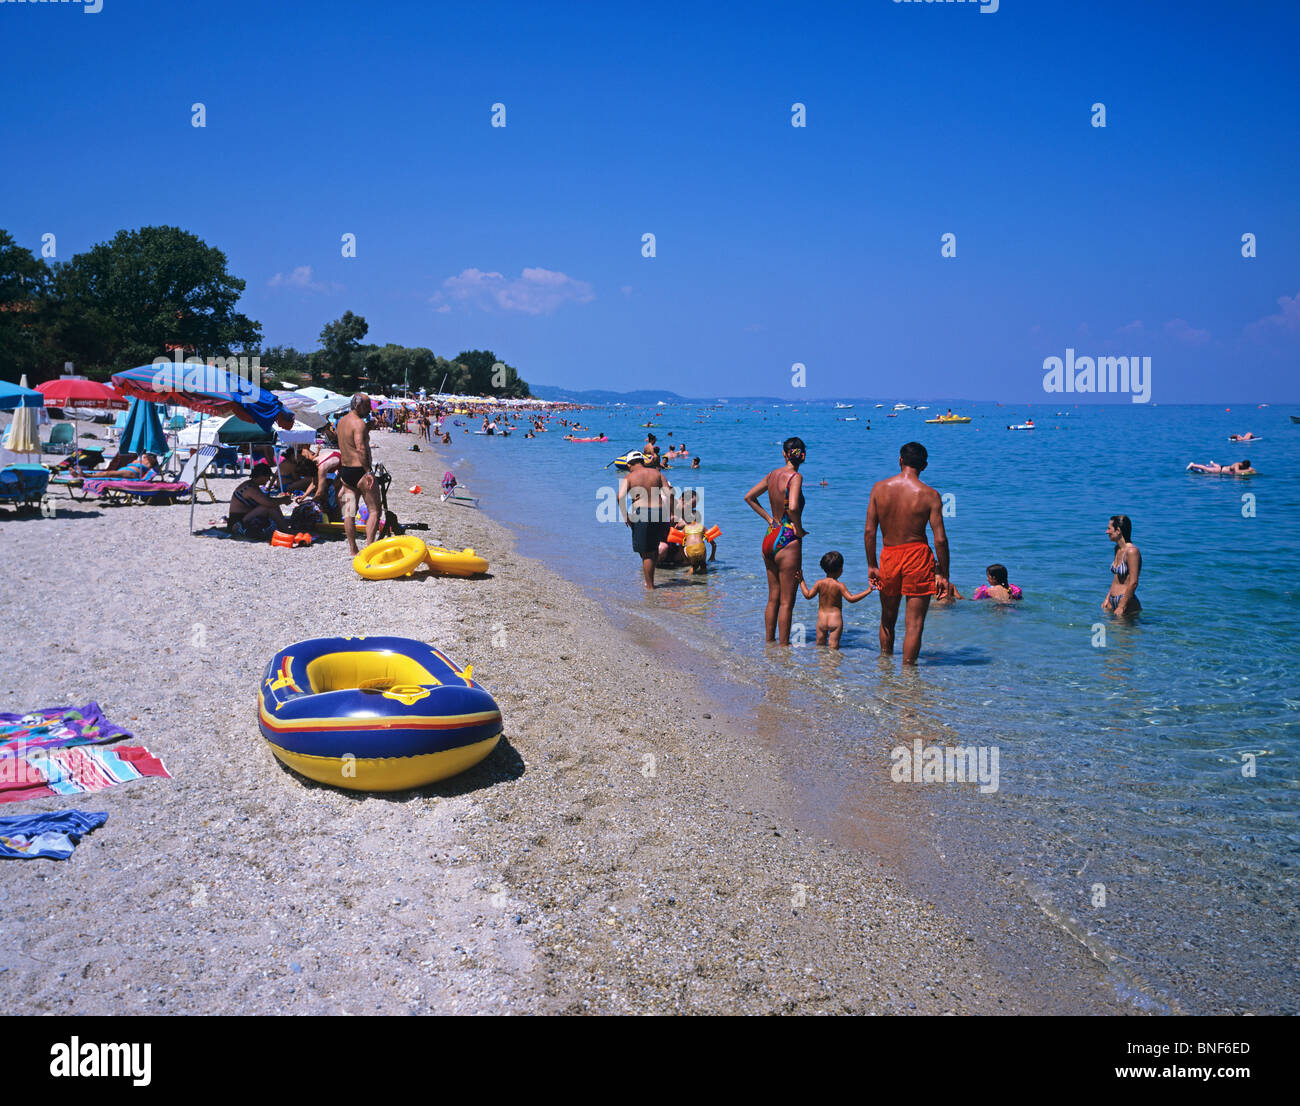 Beach scene at the popular resort of Chaniotis on the east coast of the Kassandra Peninsula Stock Photo